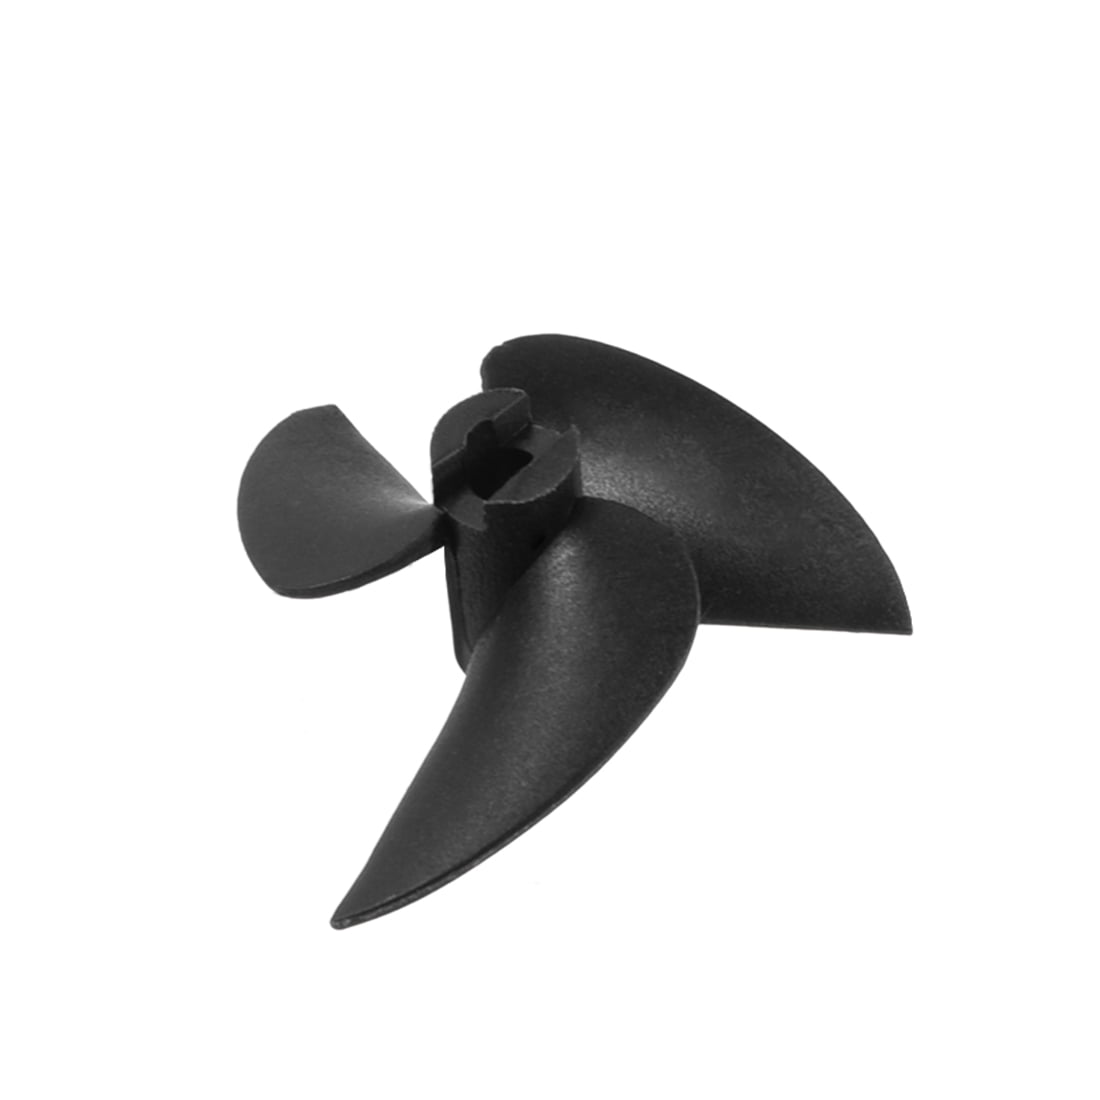 35mm x 1.9mm x 3mm Nylon 3-Vane Rotating RC Boat Prop Propeller Black 